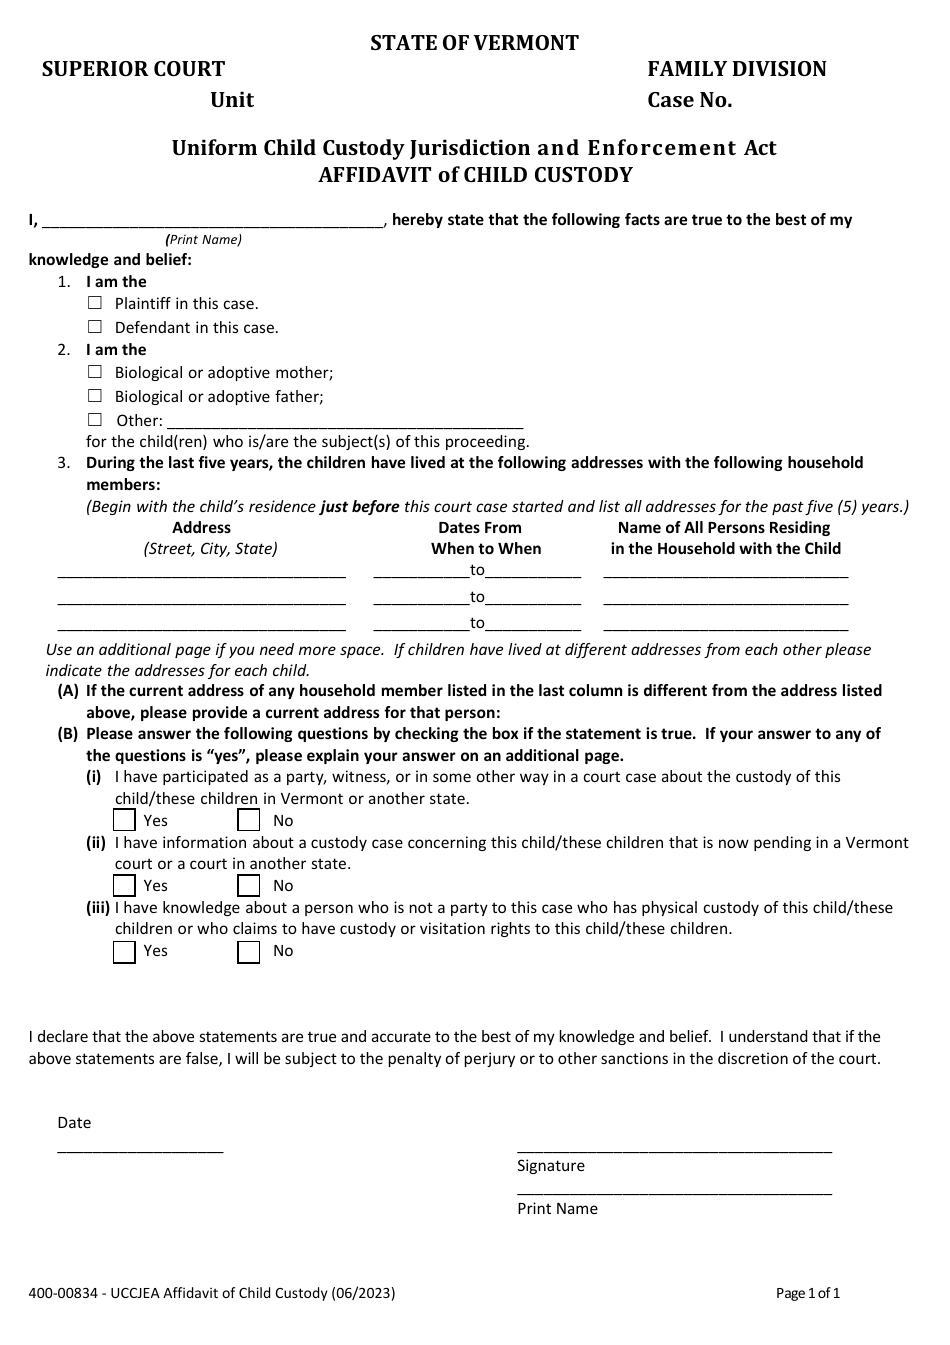 Form 400-00834 Uniform Child Custody Jurisdiction and Enforcement Act Affidavit of Child Custody - Vermont, Page 1